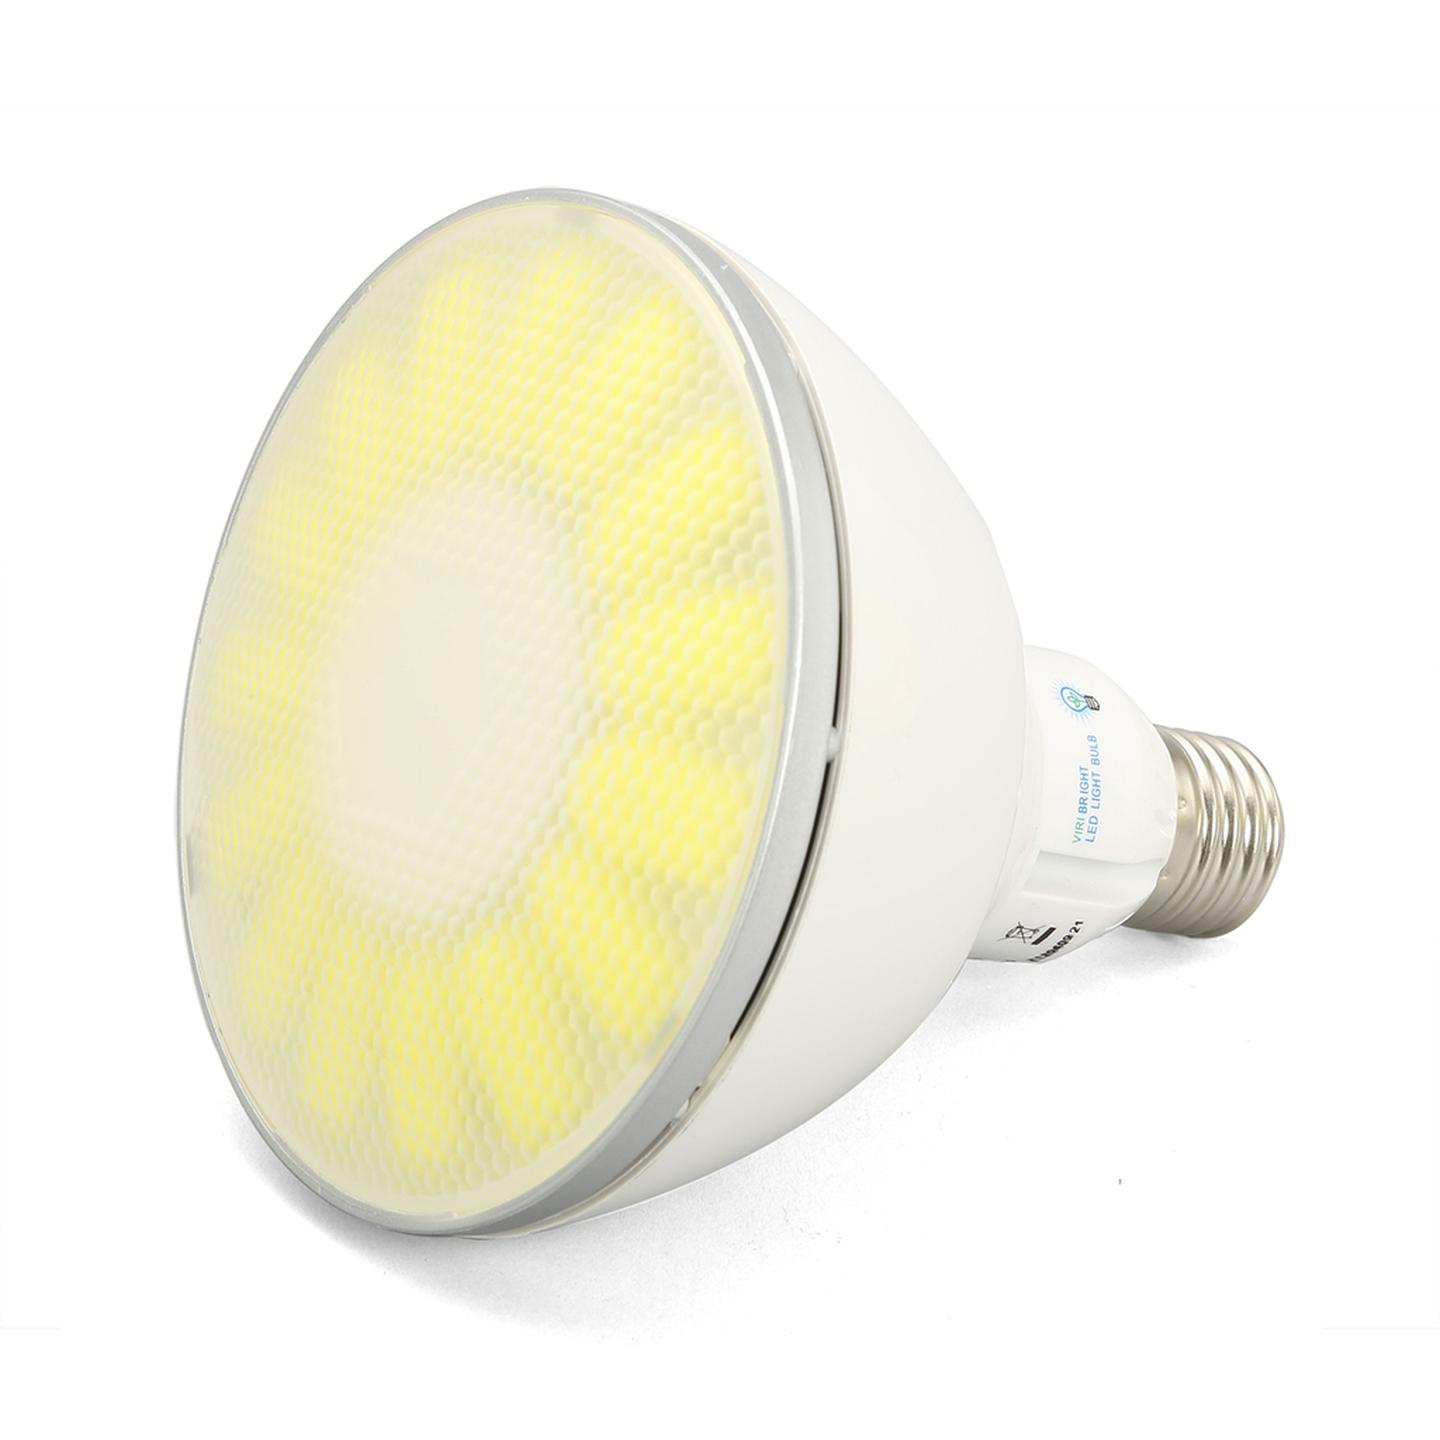 Viribright 18W PAR38 LED Spotlight - Warm White